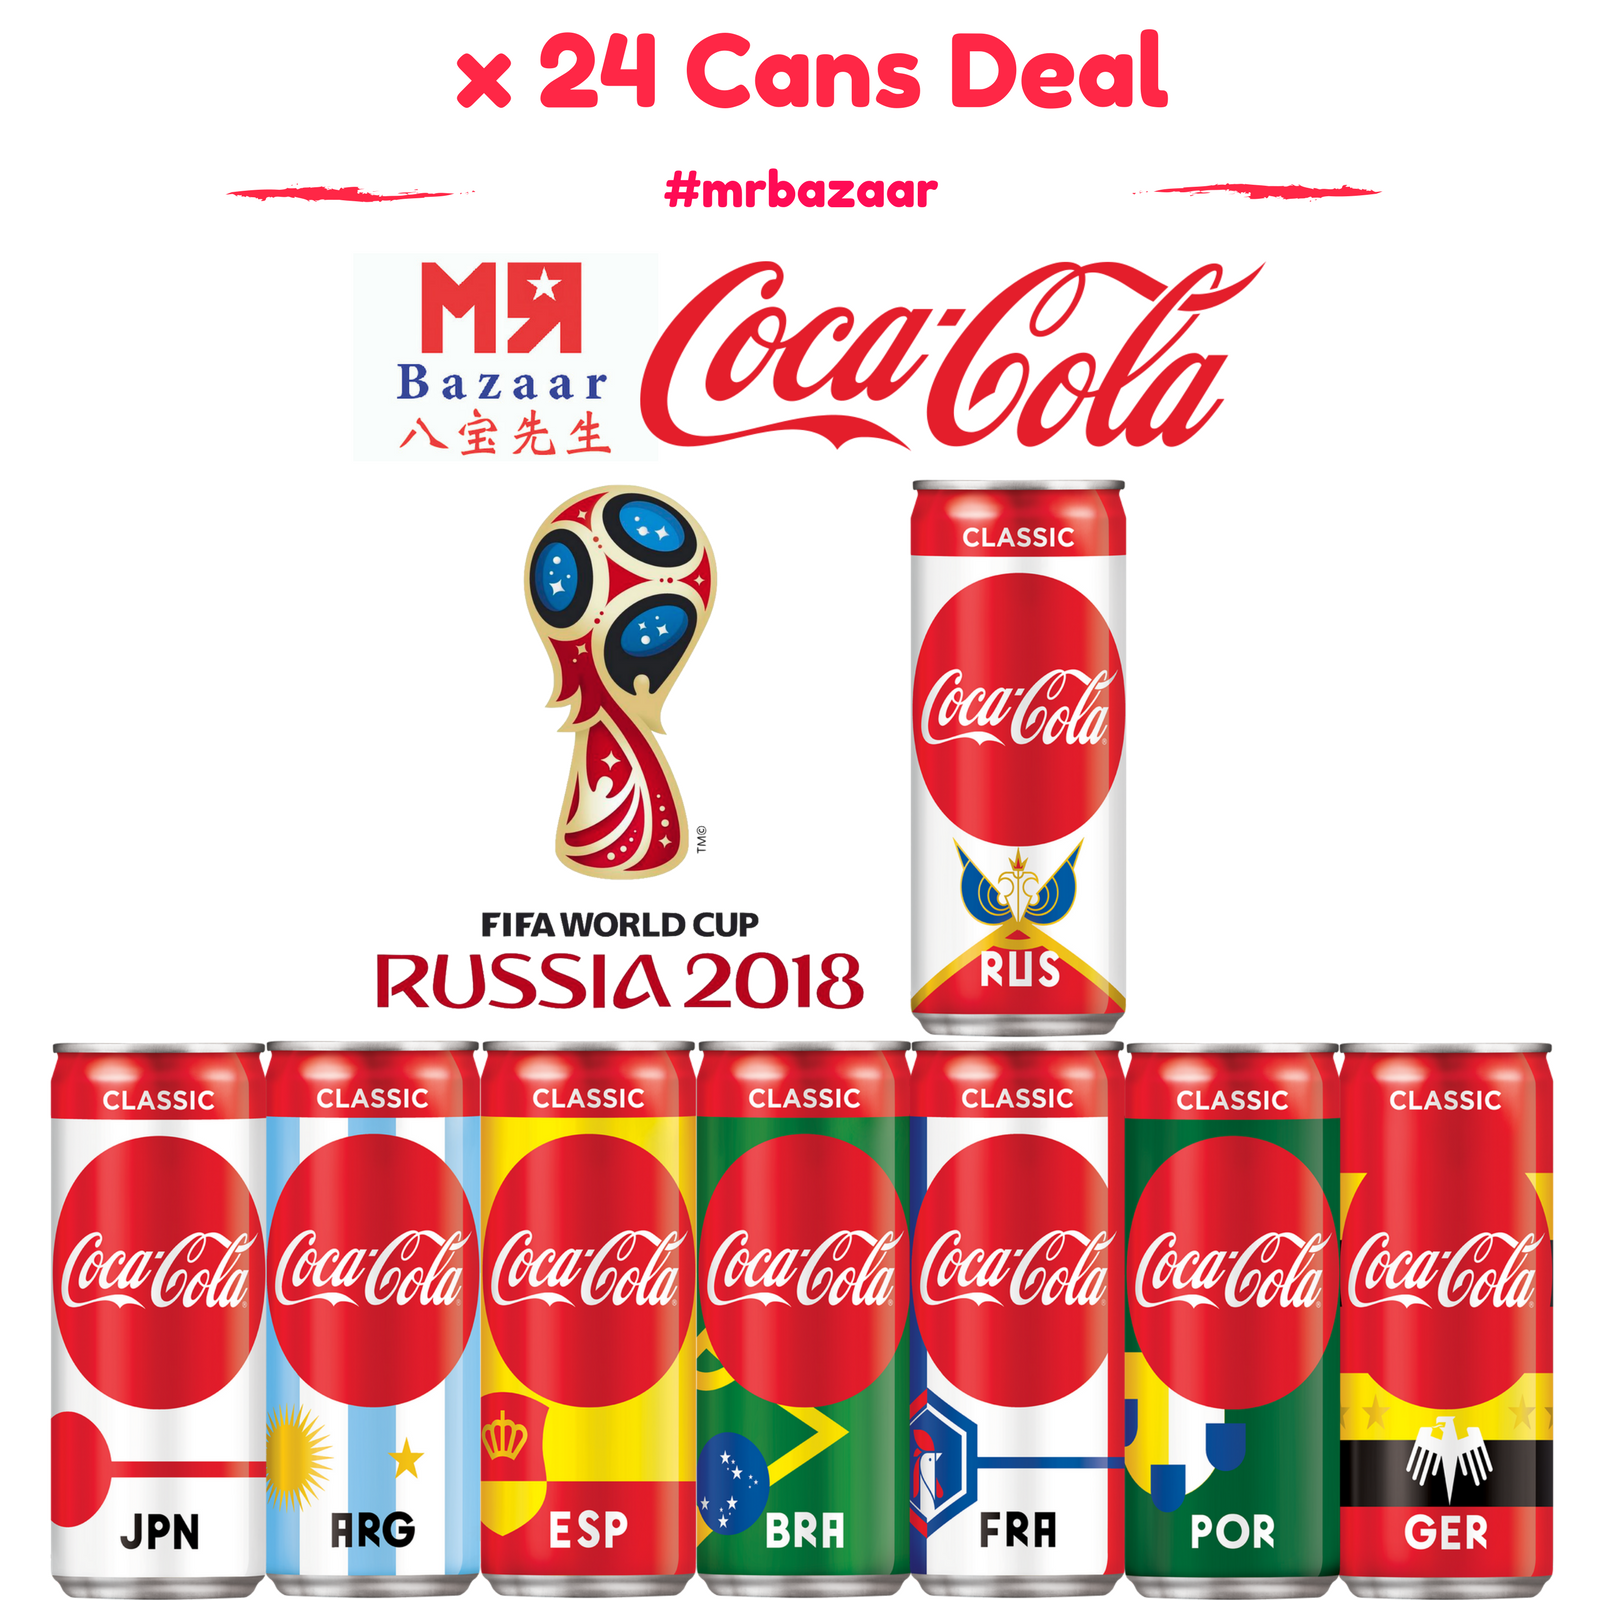 Coca Cola Coke Classic x 24 Cans Carton Deal (320ml)